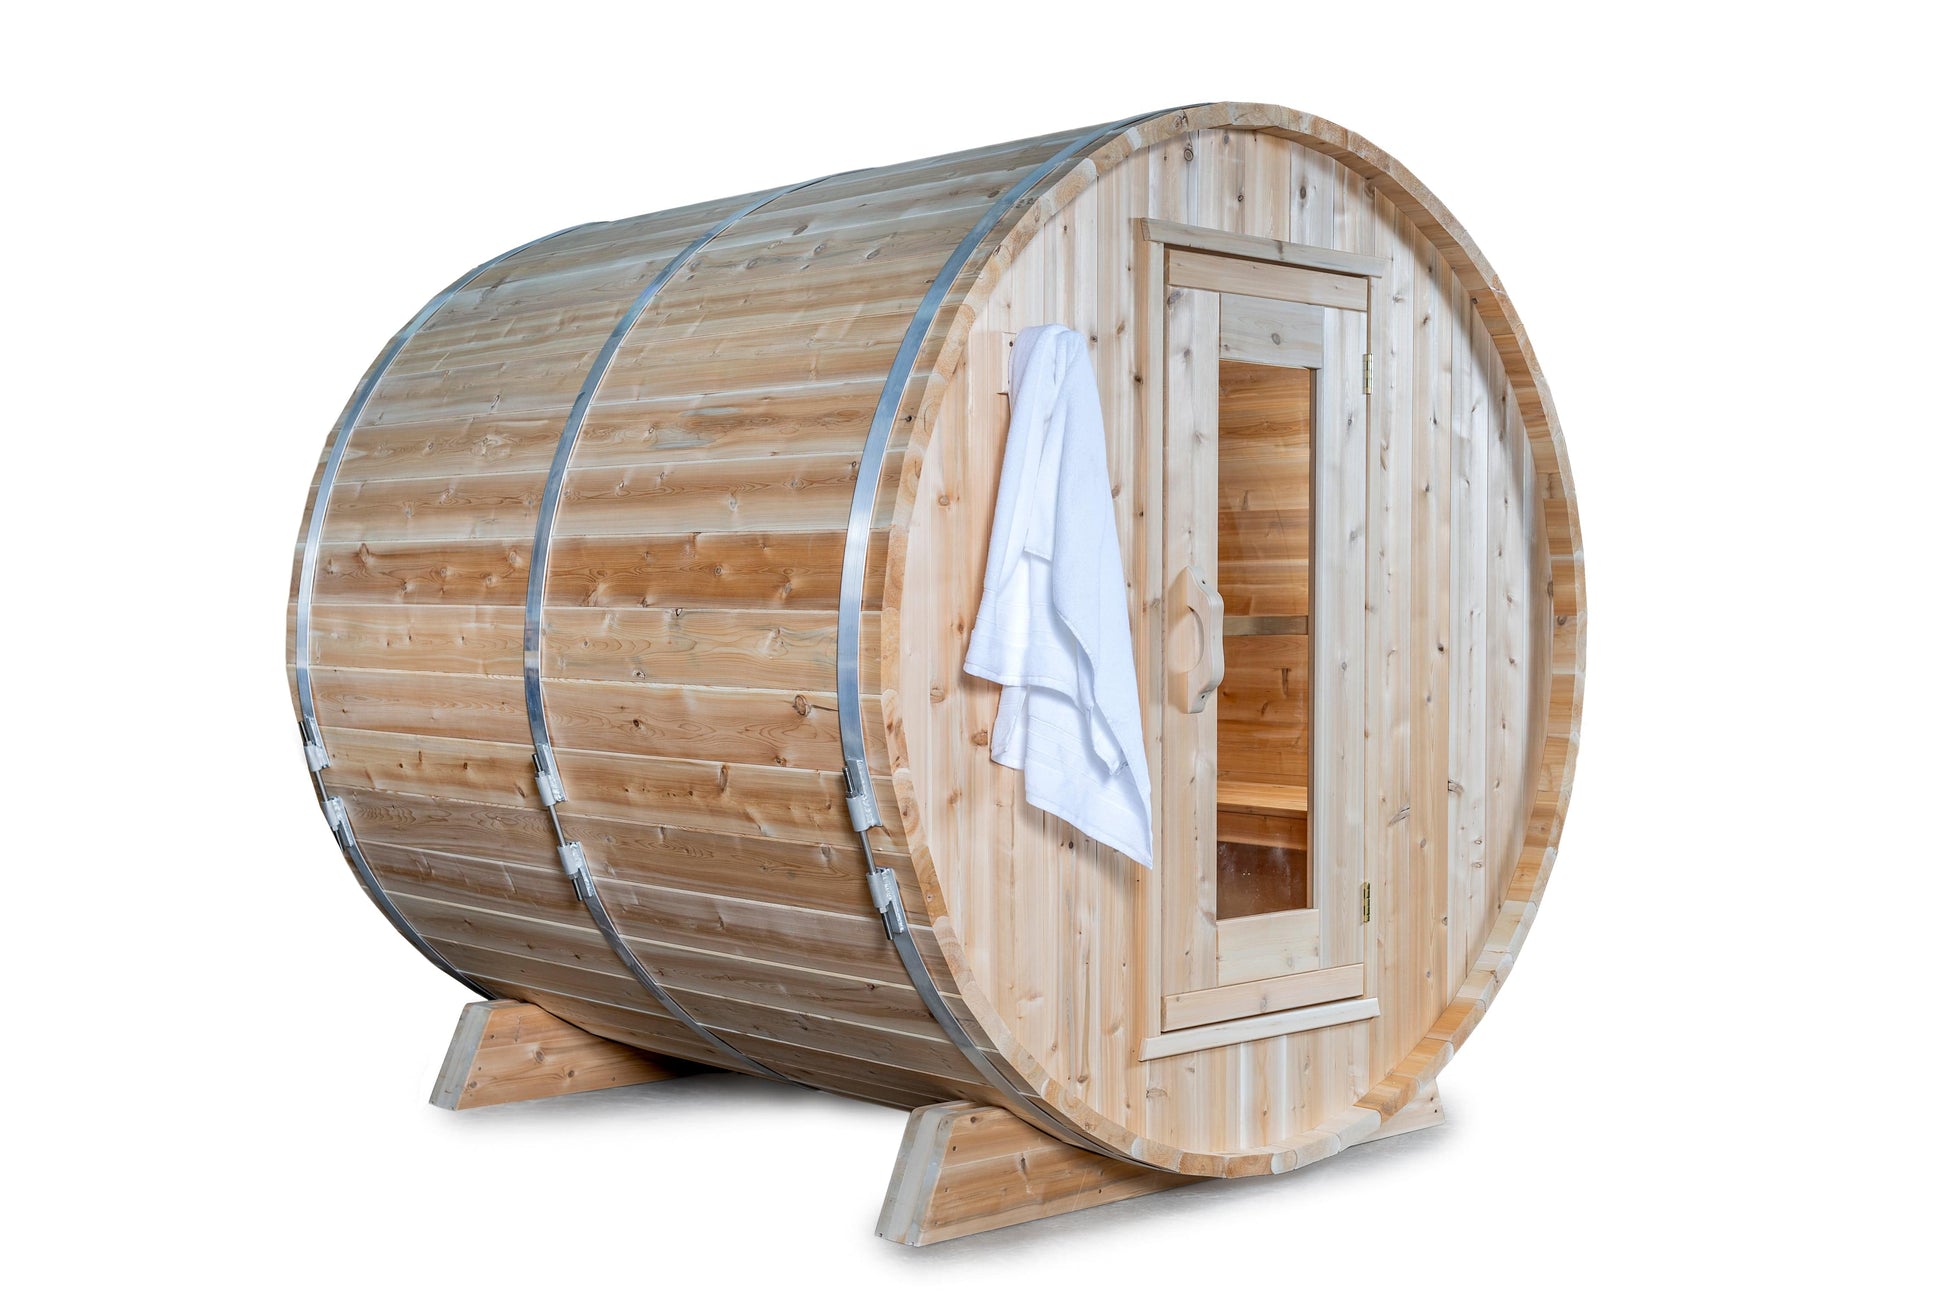 Dundalk Harmony Barrel 4 Person Sauna CTC22W w/ Harvia KIP 8KW Sauna Heater Included